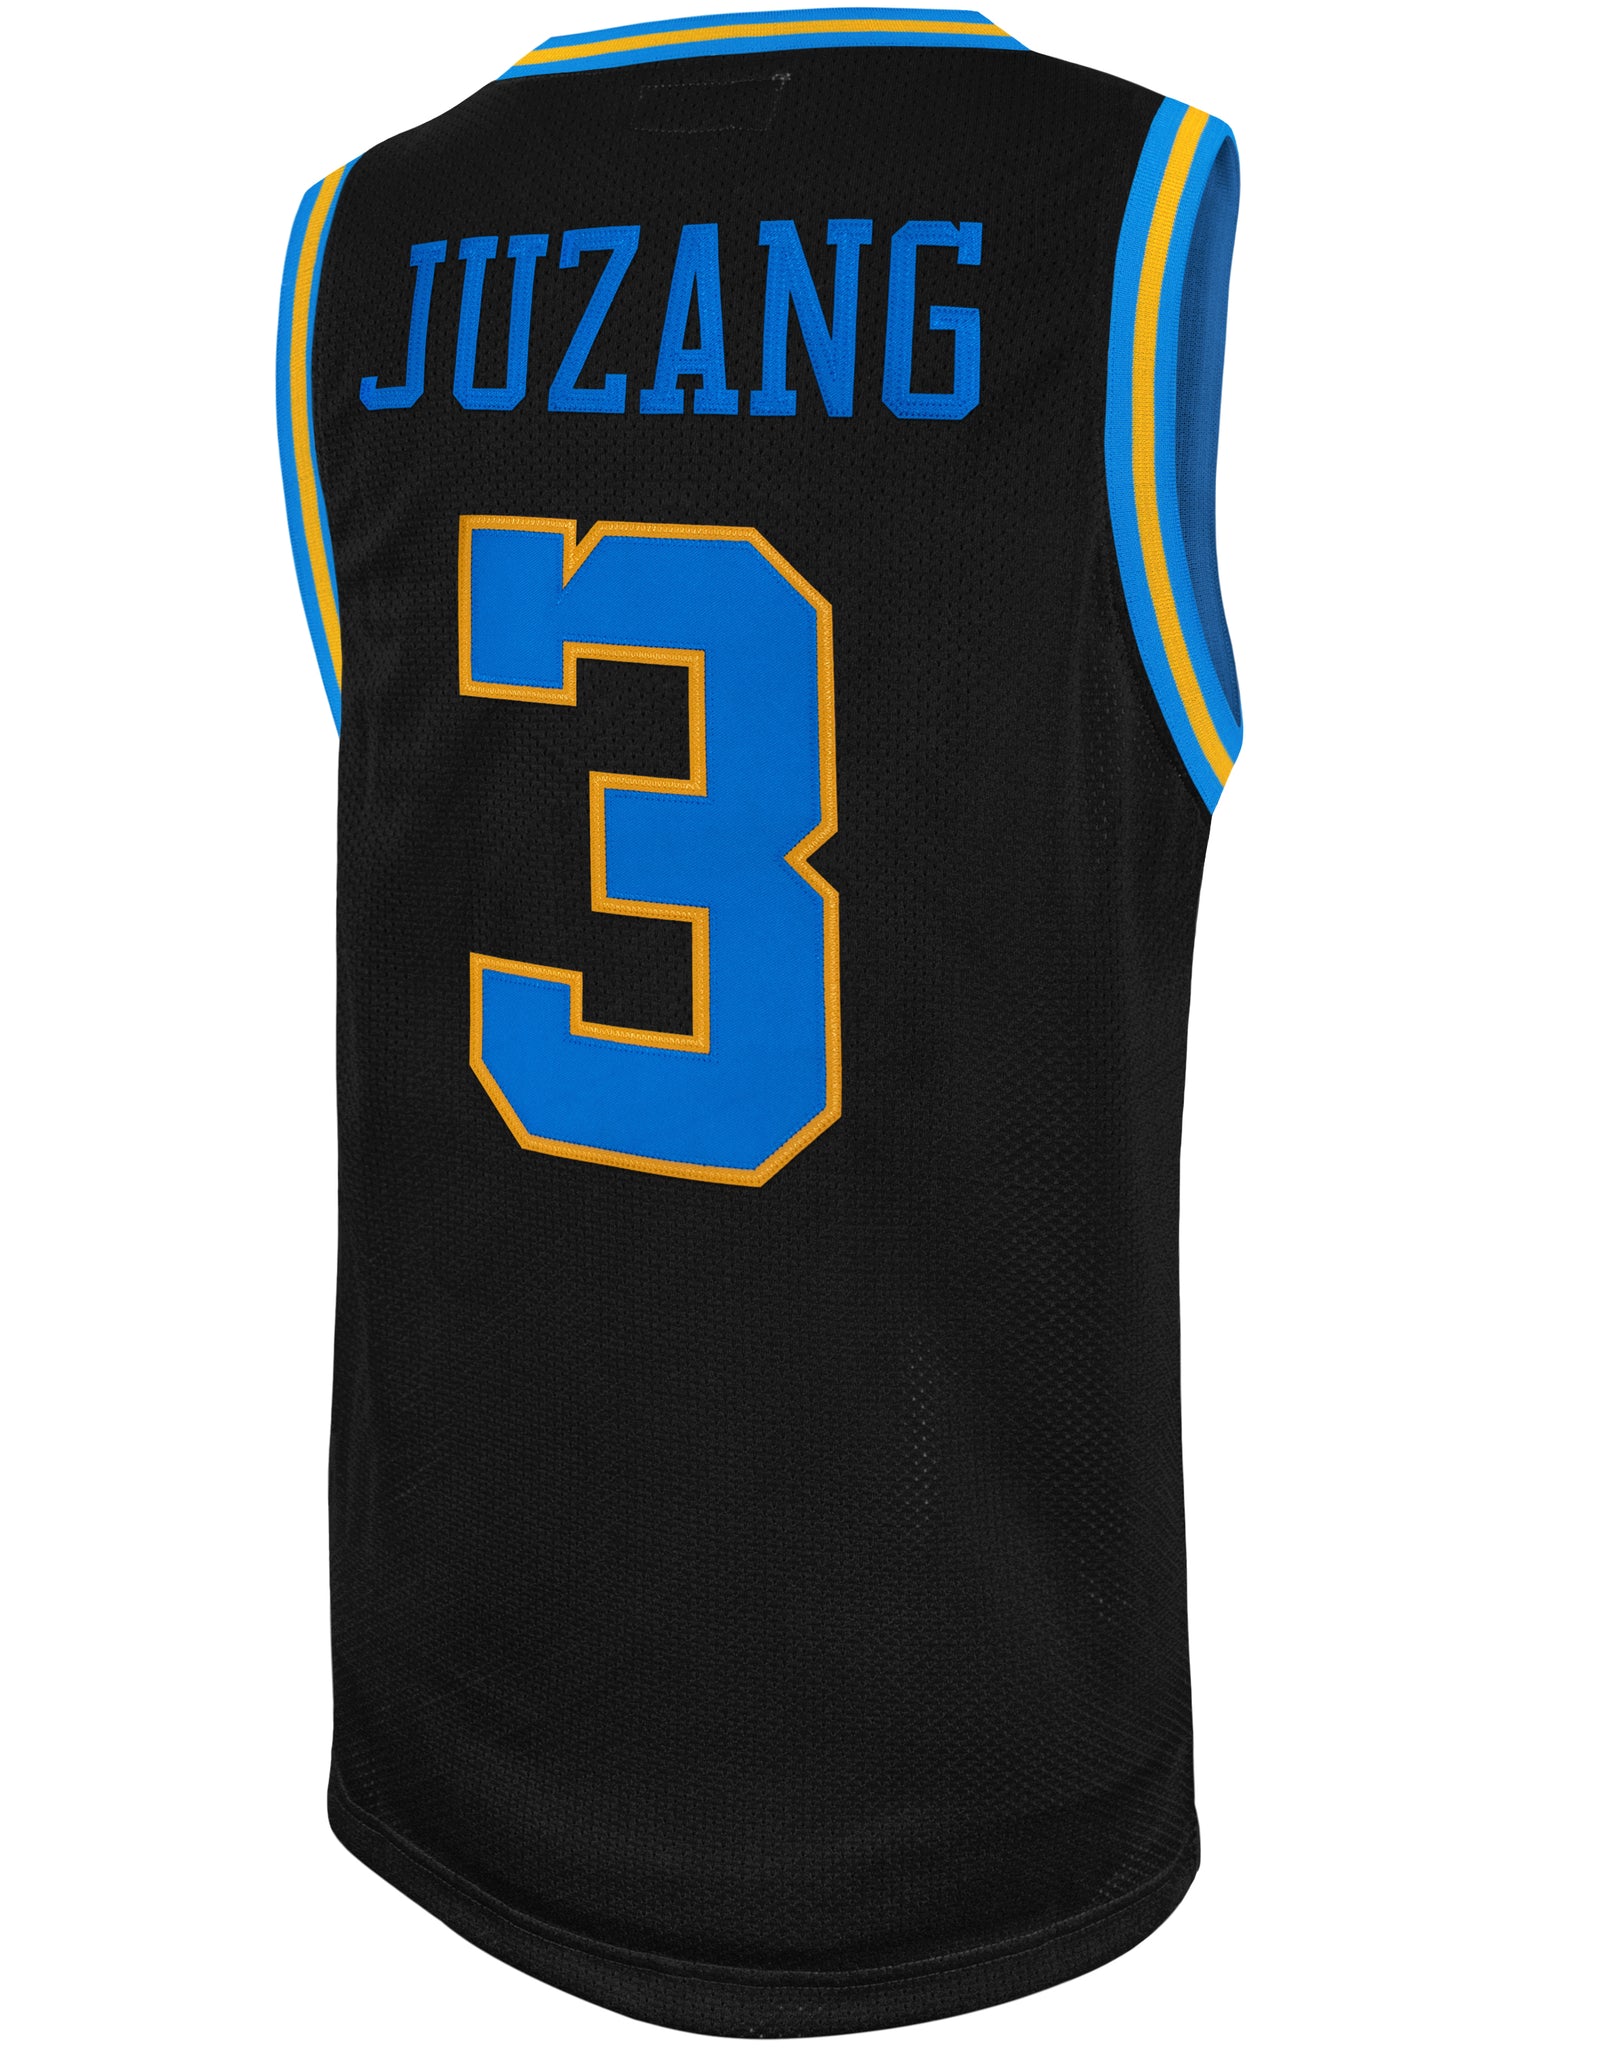 UCLA Bruins Johnny Juzang Throwback Jersey